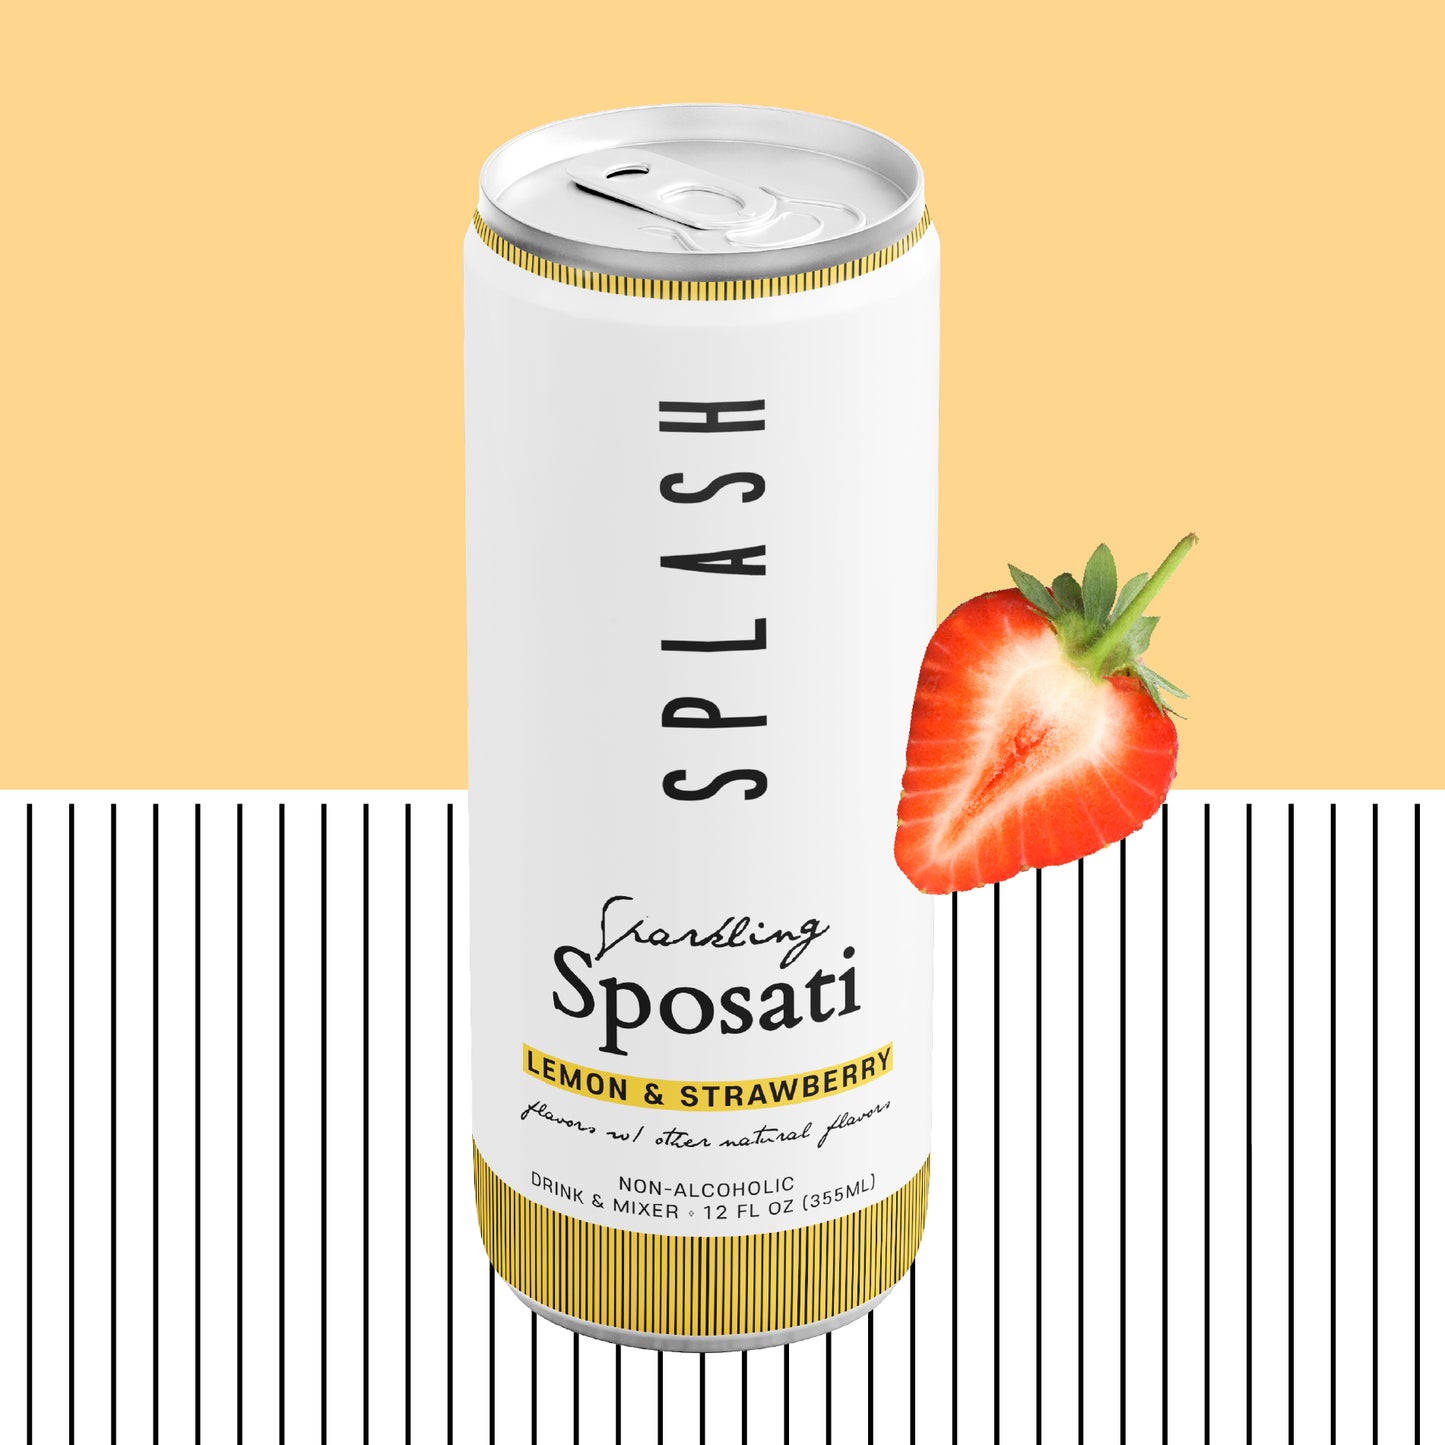 Sparkling Sposati | Signature Lemon & Strawberry